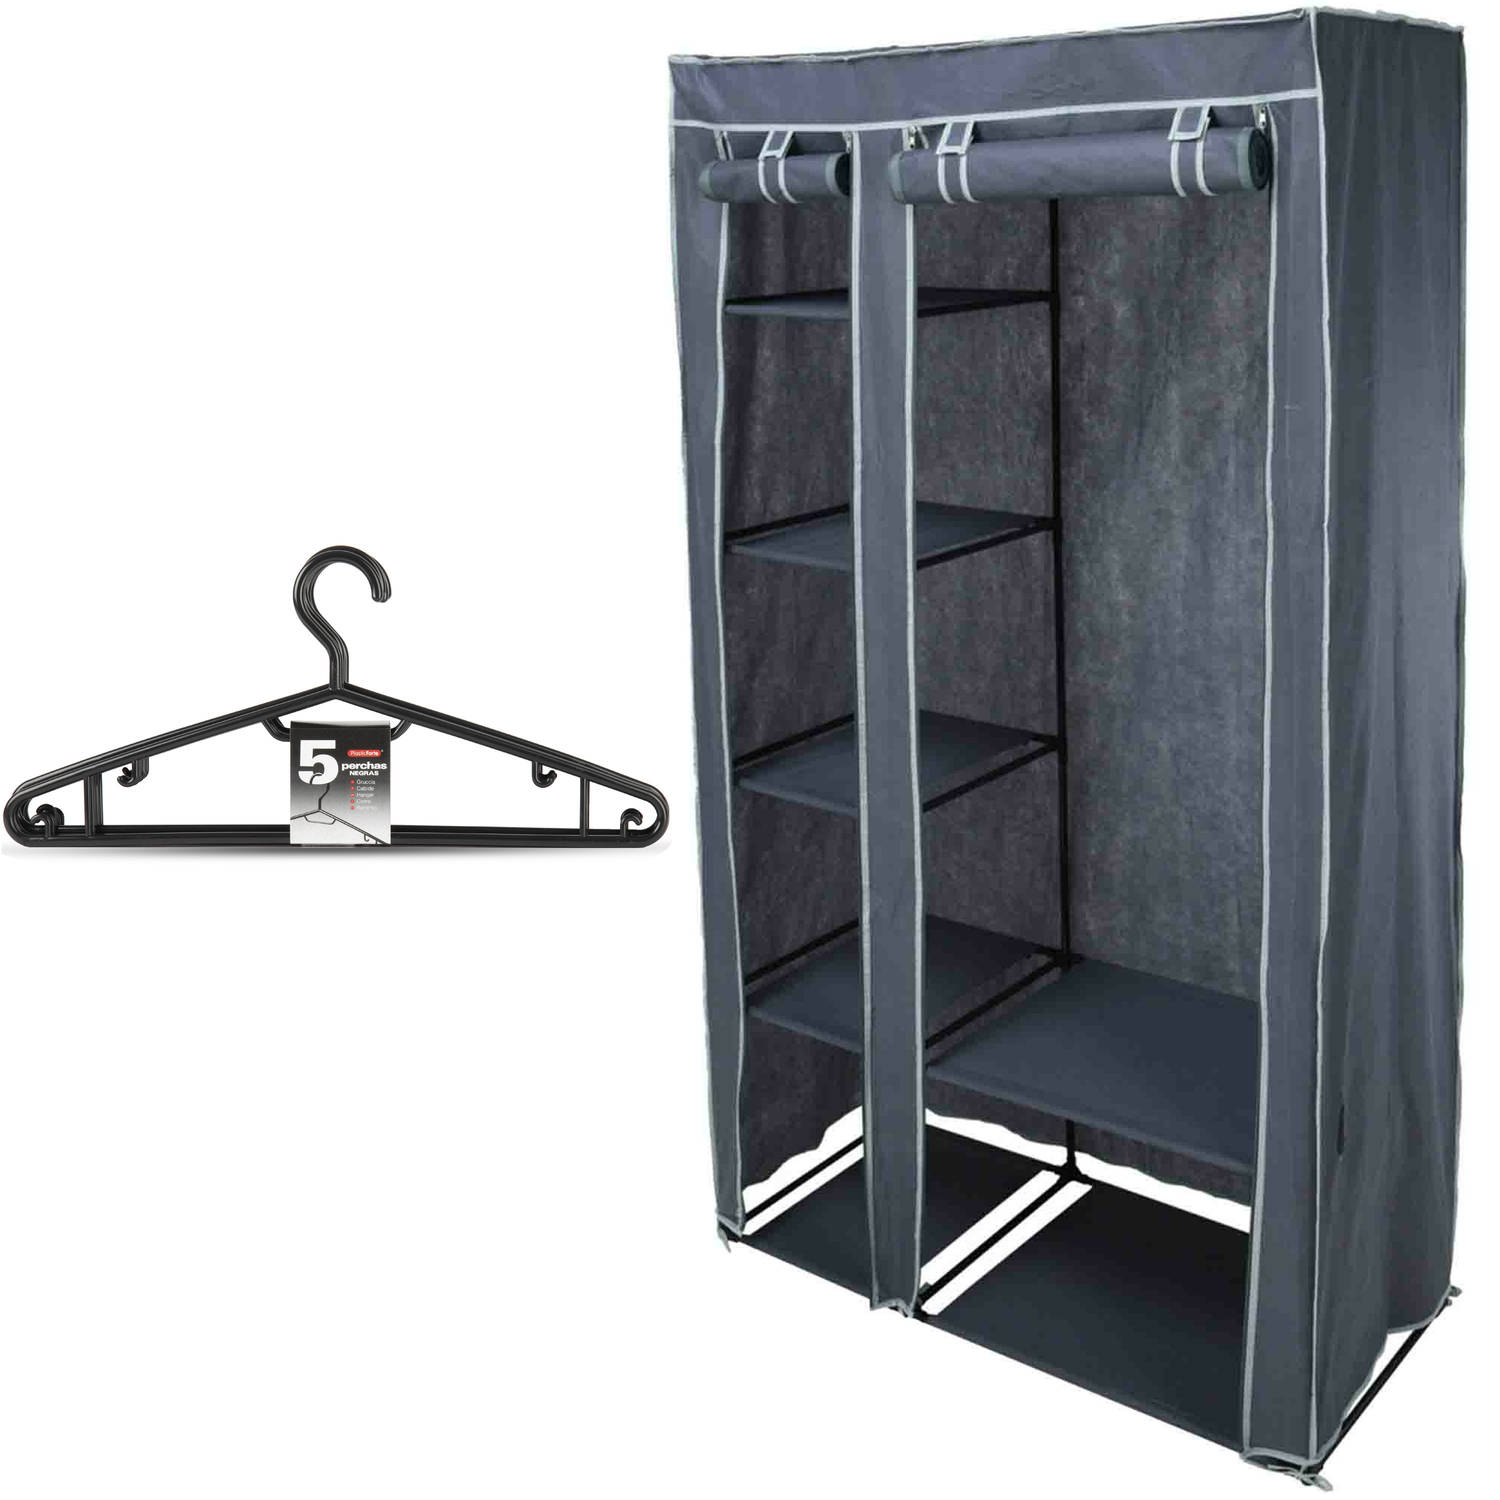 Mobiele kledingkast-garderobekast incl 10x hangers opvouwbaar grijs 174 cm Campingkledingkasten